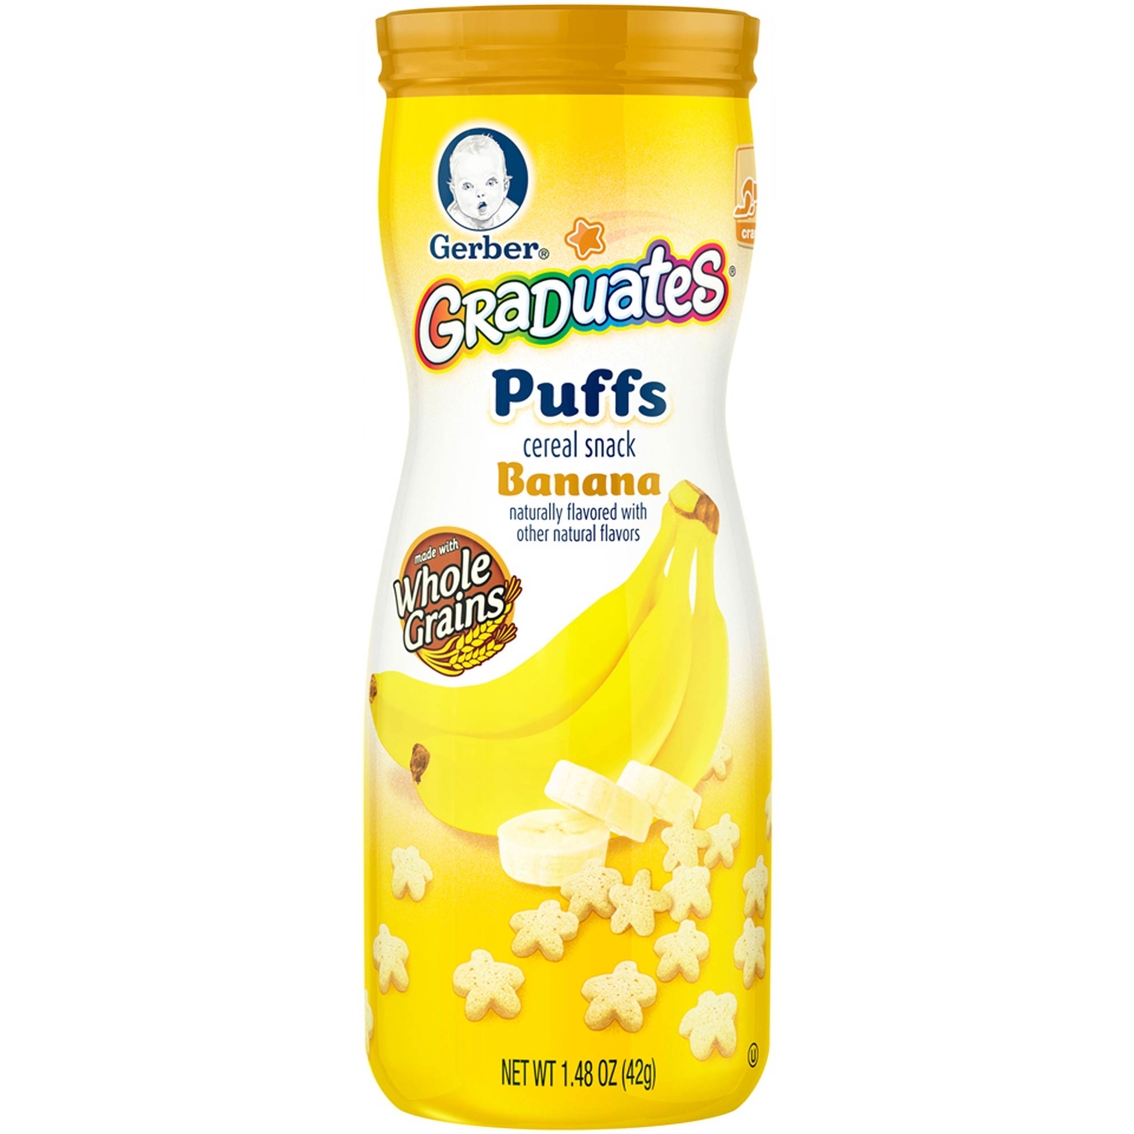 Gerber Graduates Puffs 1.48 oz. Banana Cereal Snacks